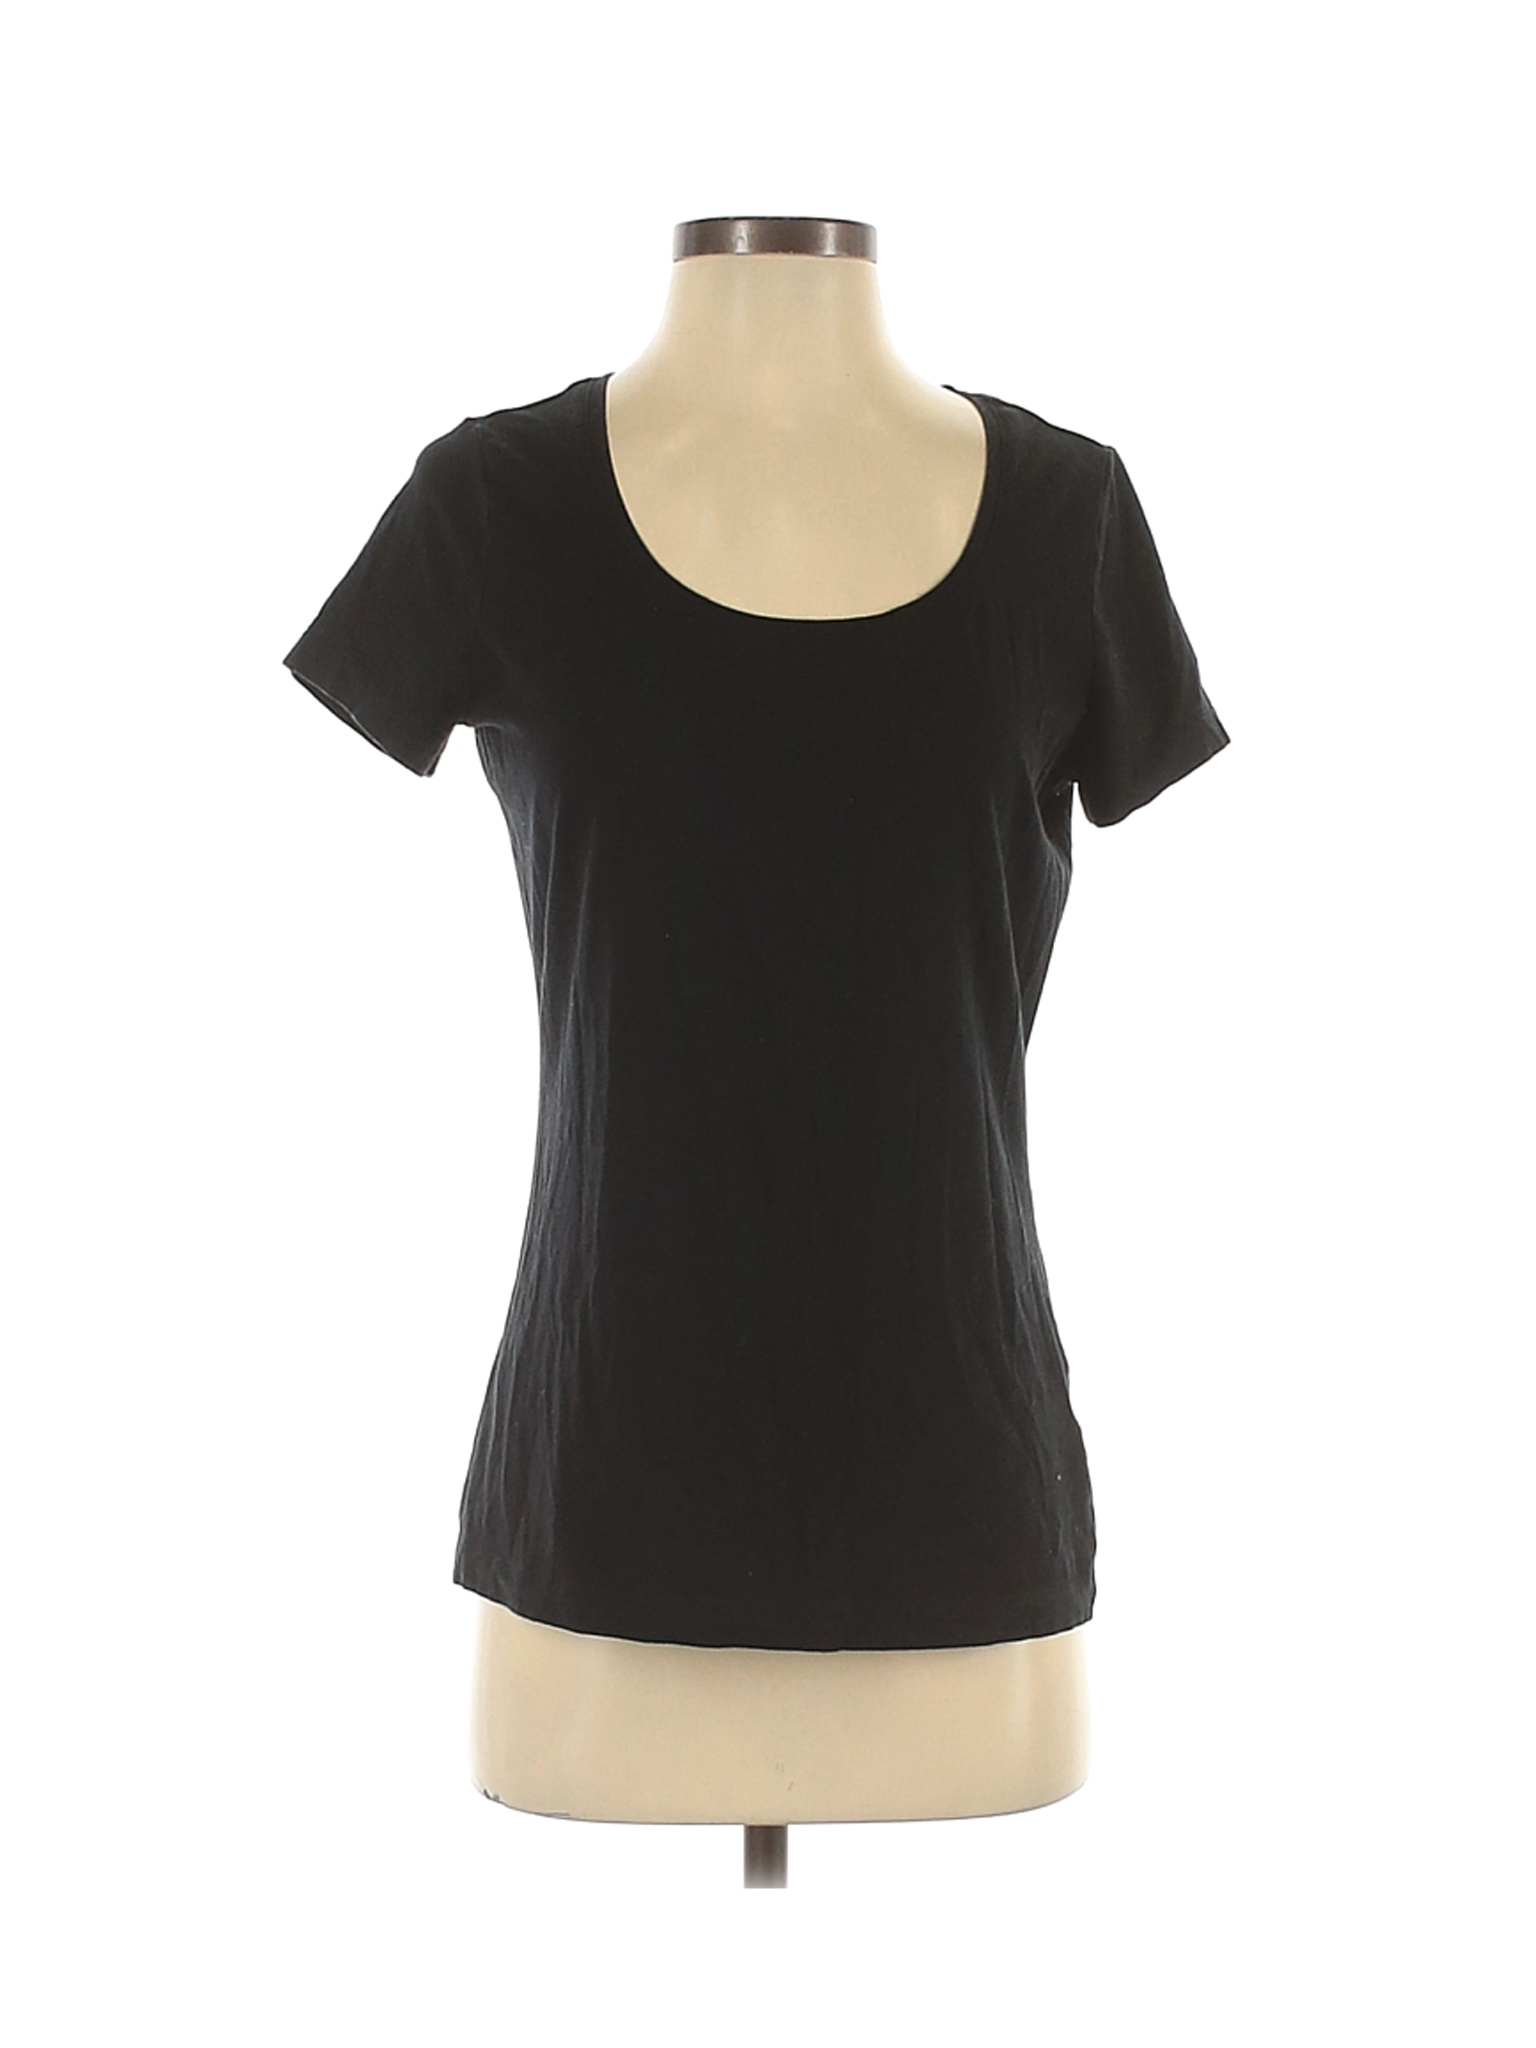 Lands' End Women Black Short Sleeve T-Shirt S | eBay